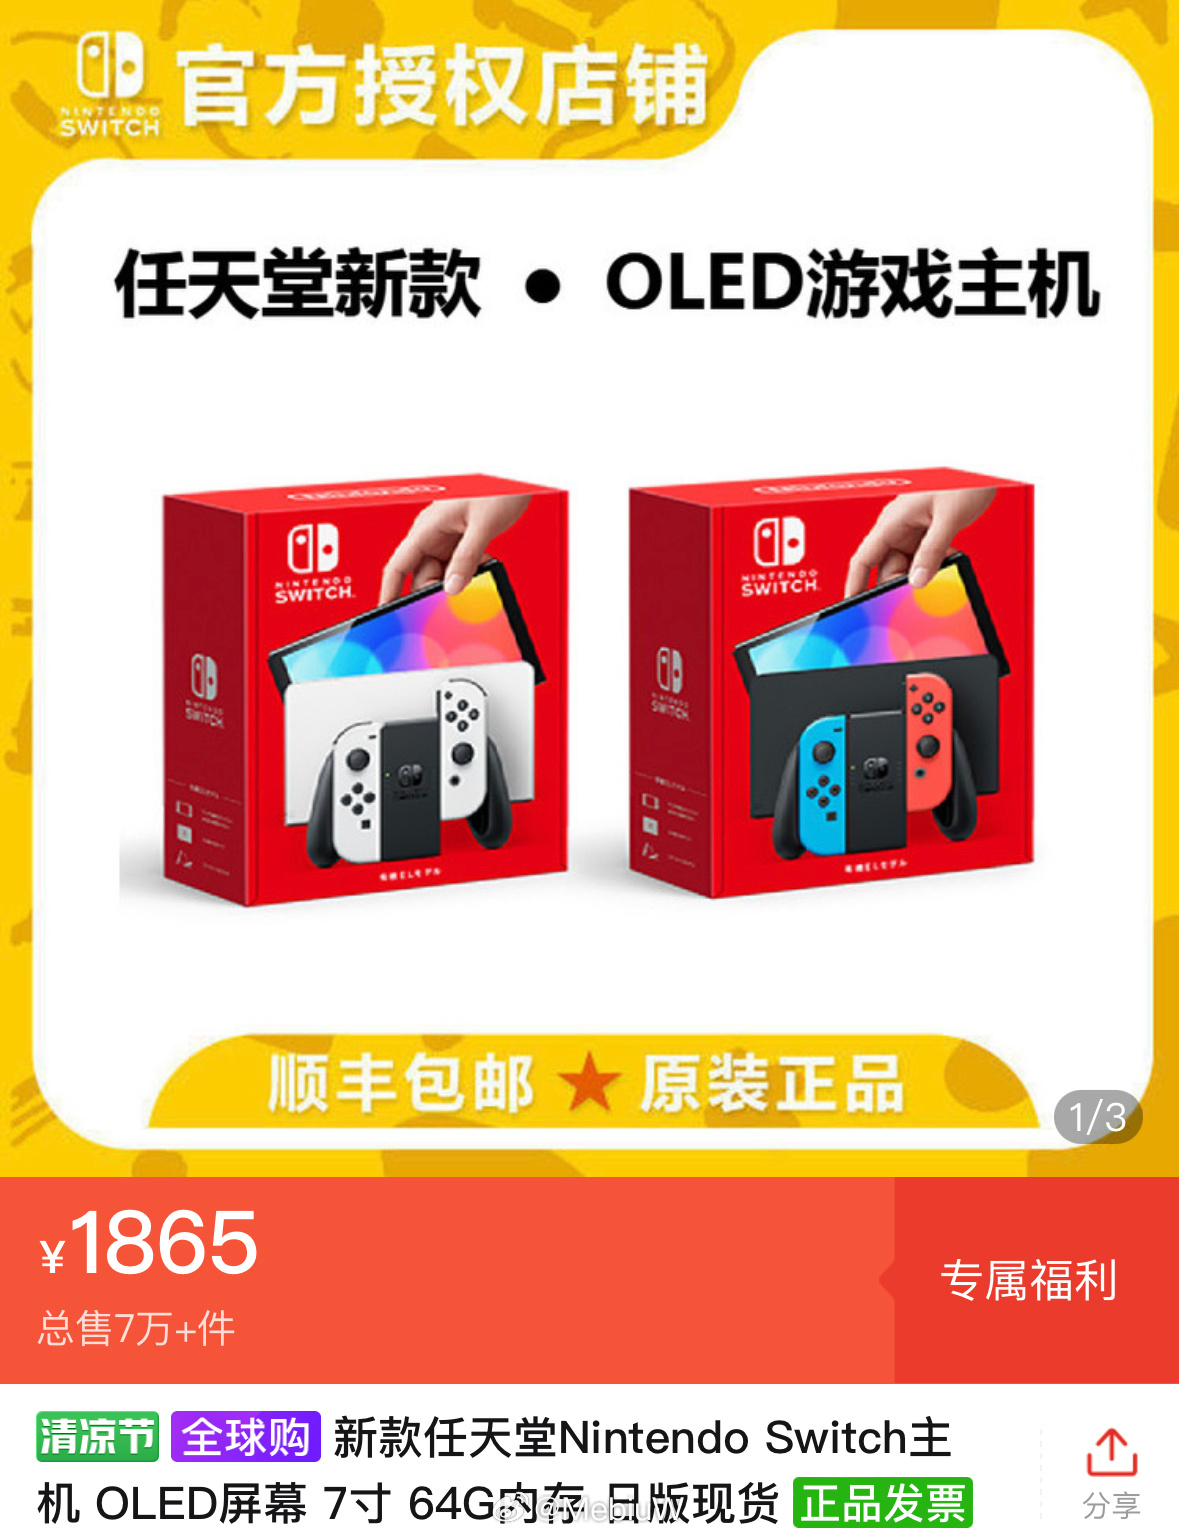 【Switch】最近OLED版的Switch 价格挺好的 1860附近 